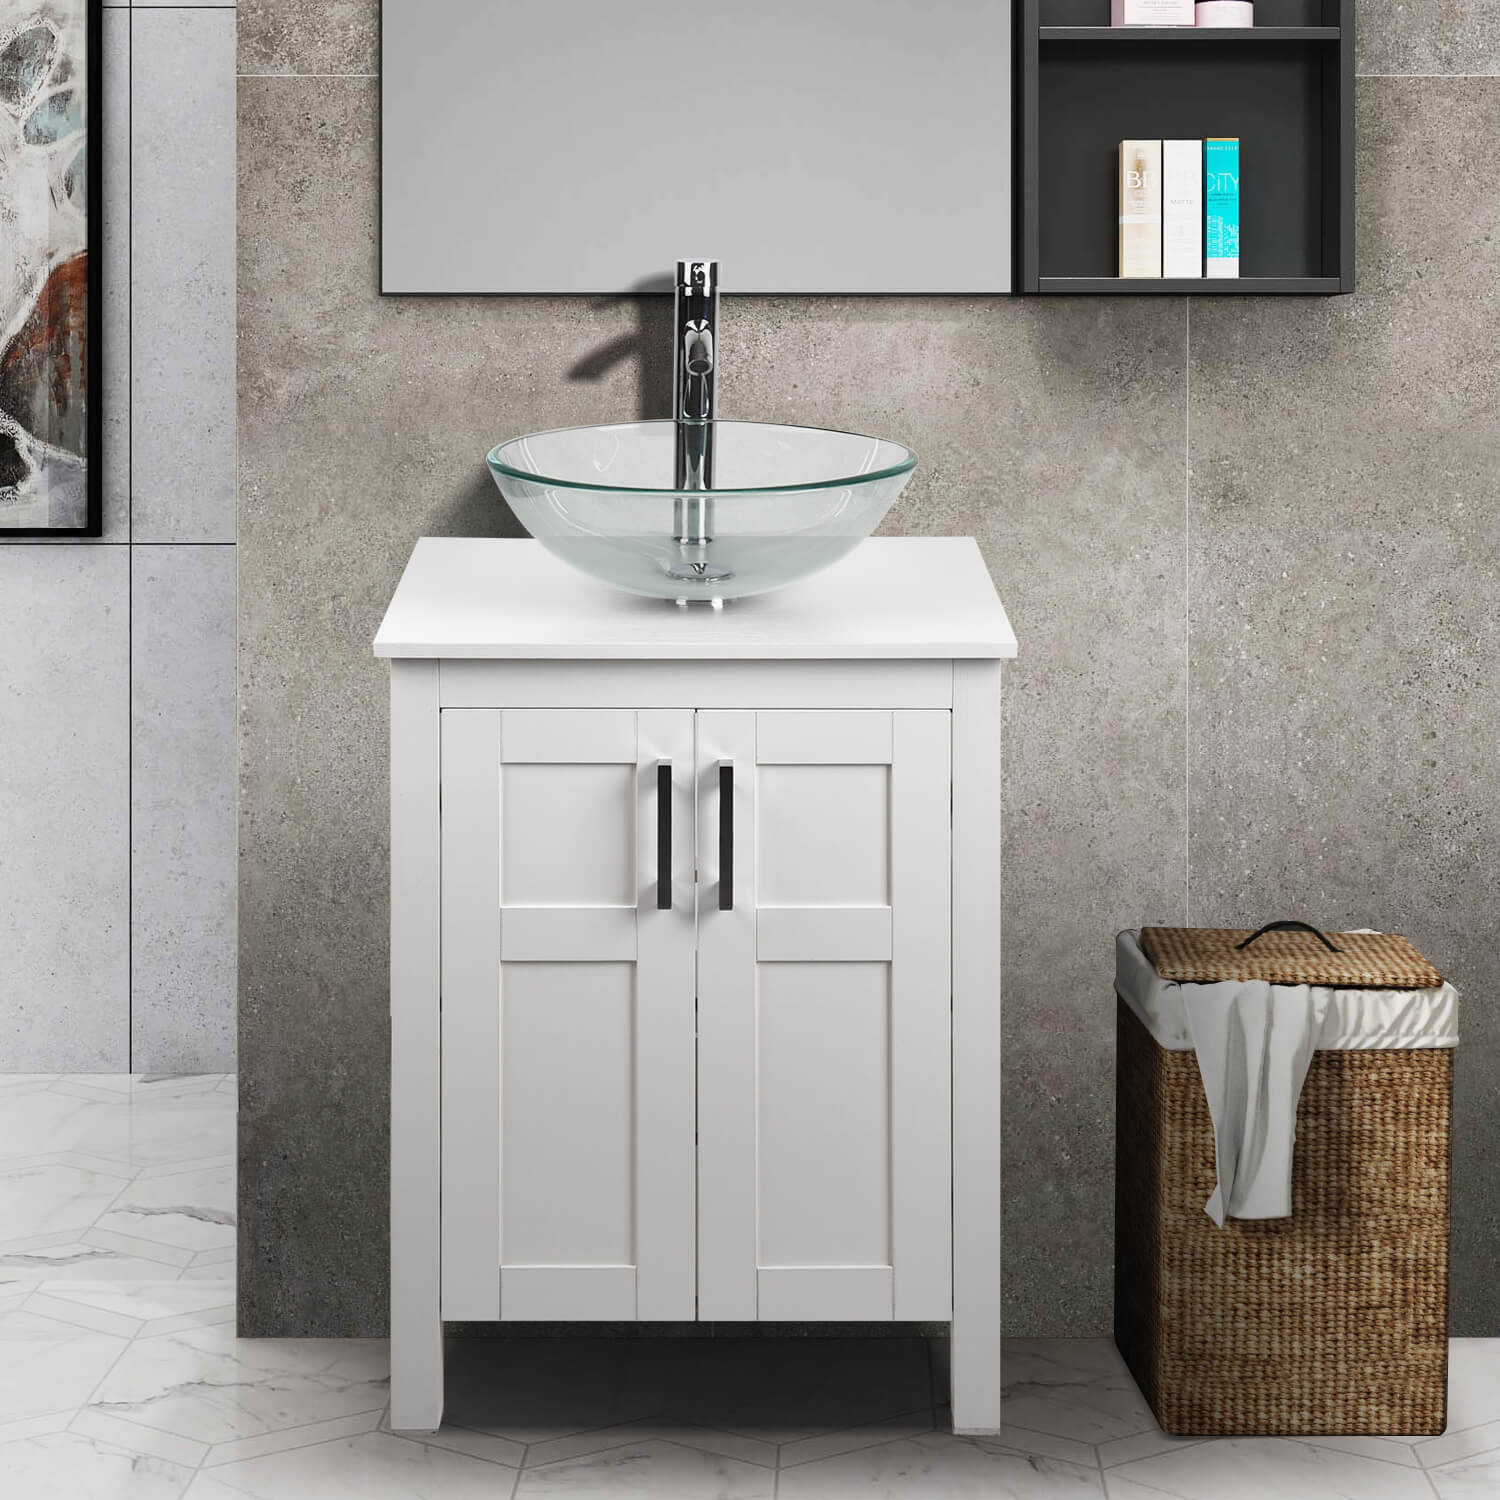 Elecwish White Bathroom Vanity and Clear Glass Sink Set HW1120-WH display scene